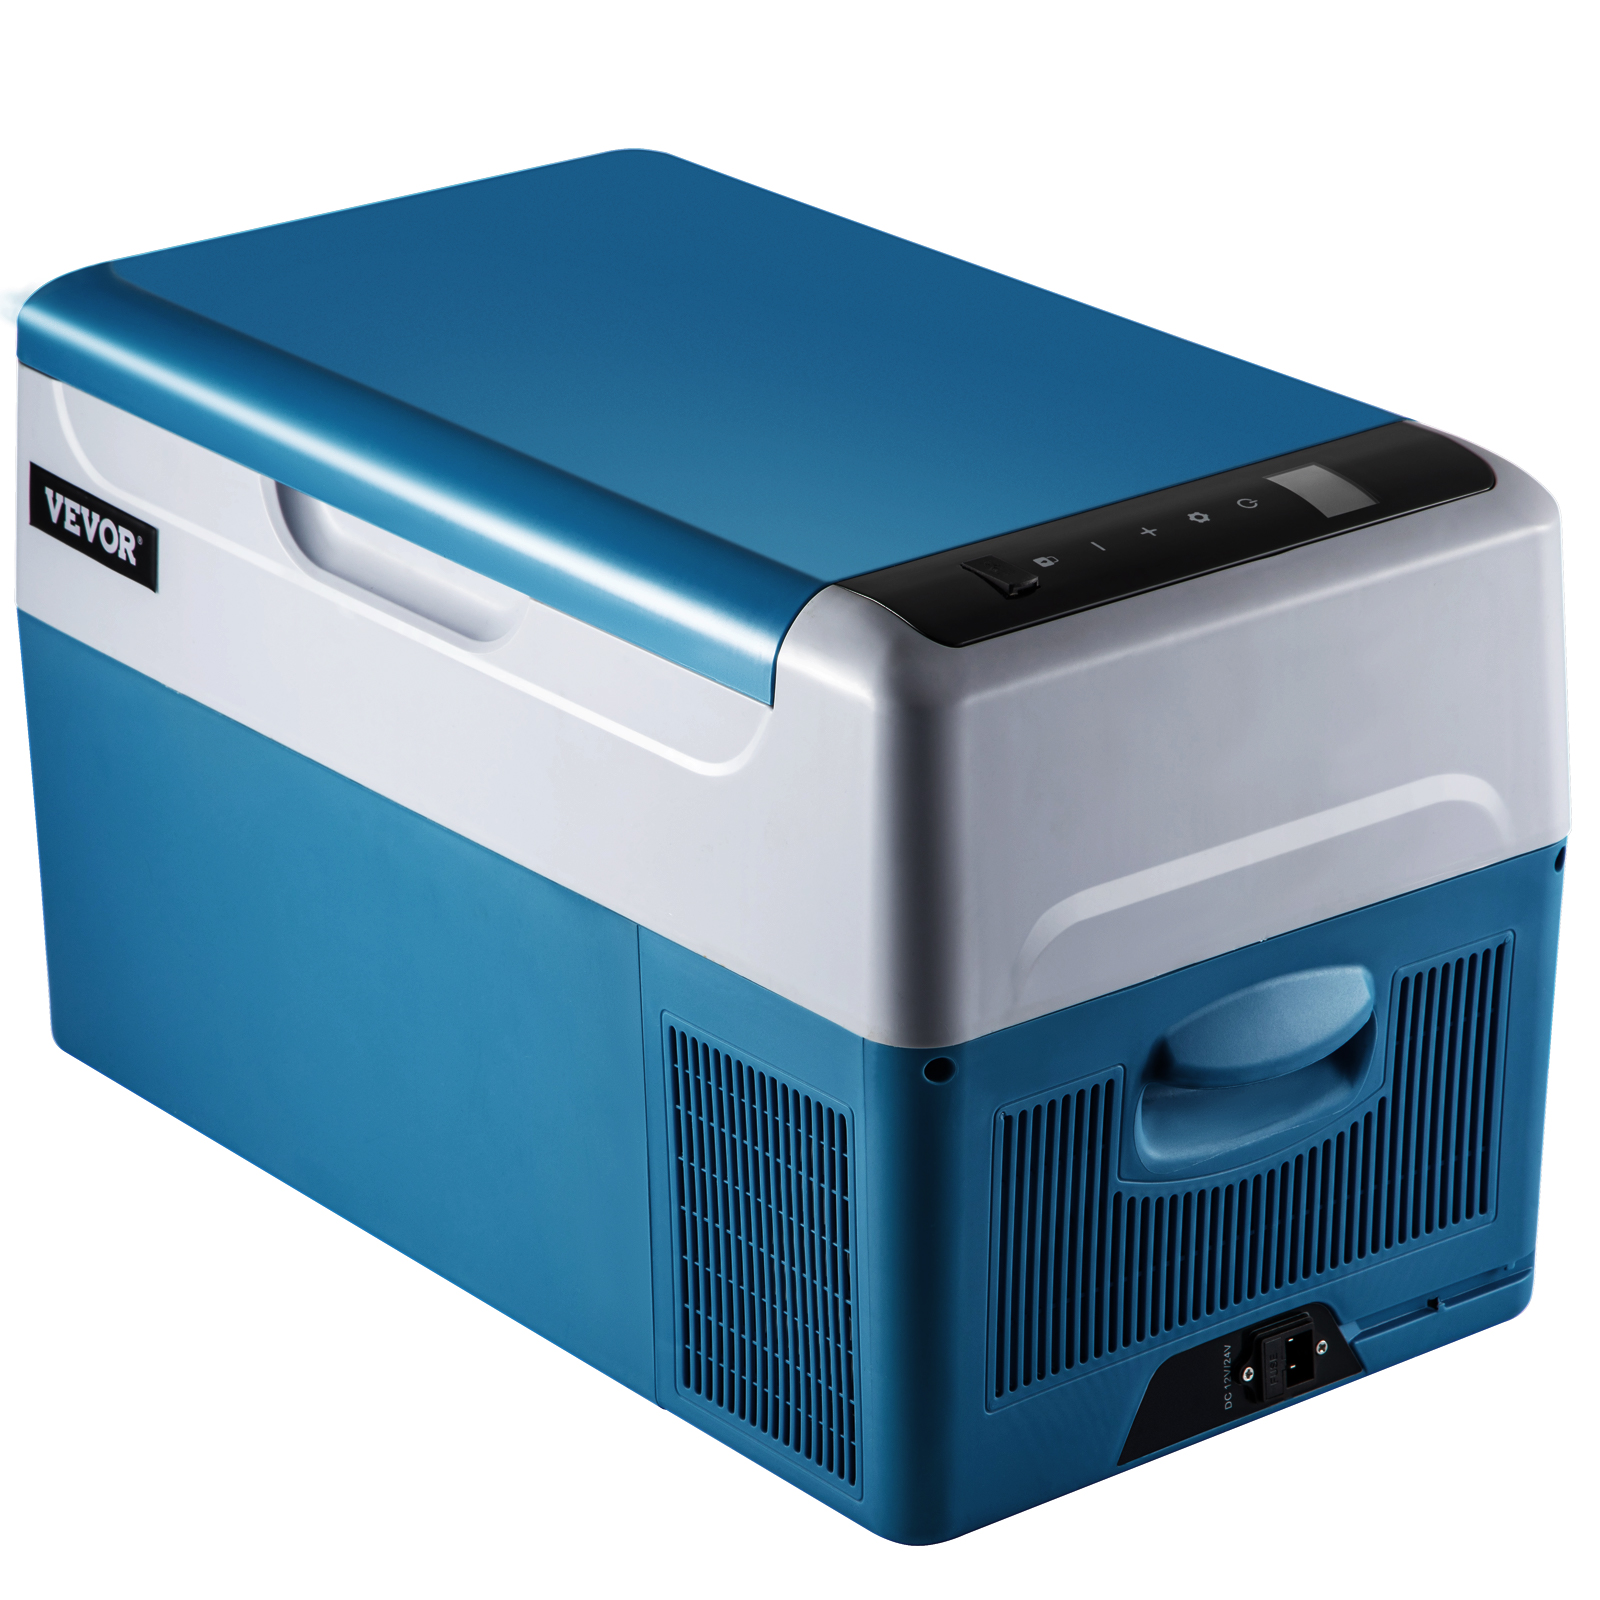 VEVORbrand 55L Portable Car Refrigerator 58 Quart Compact RV